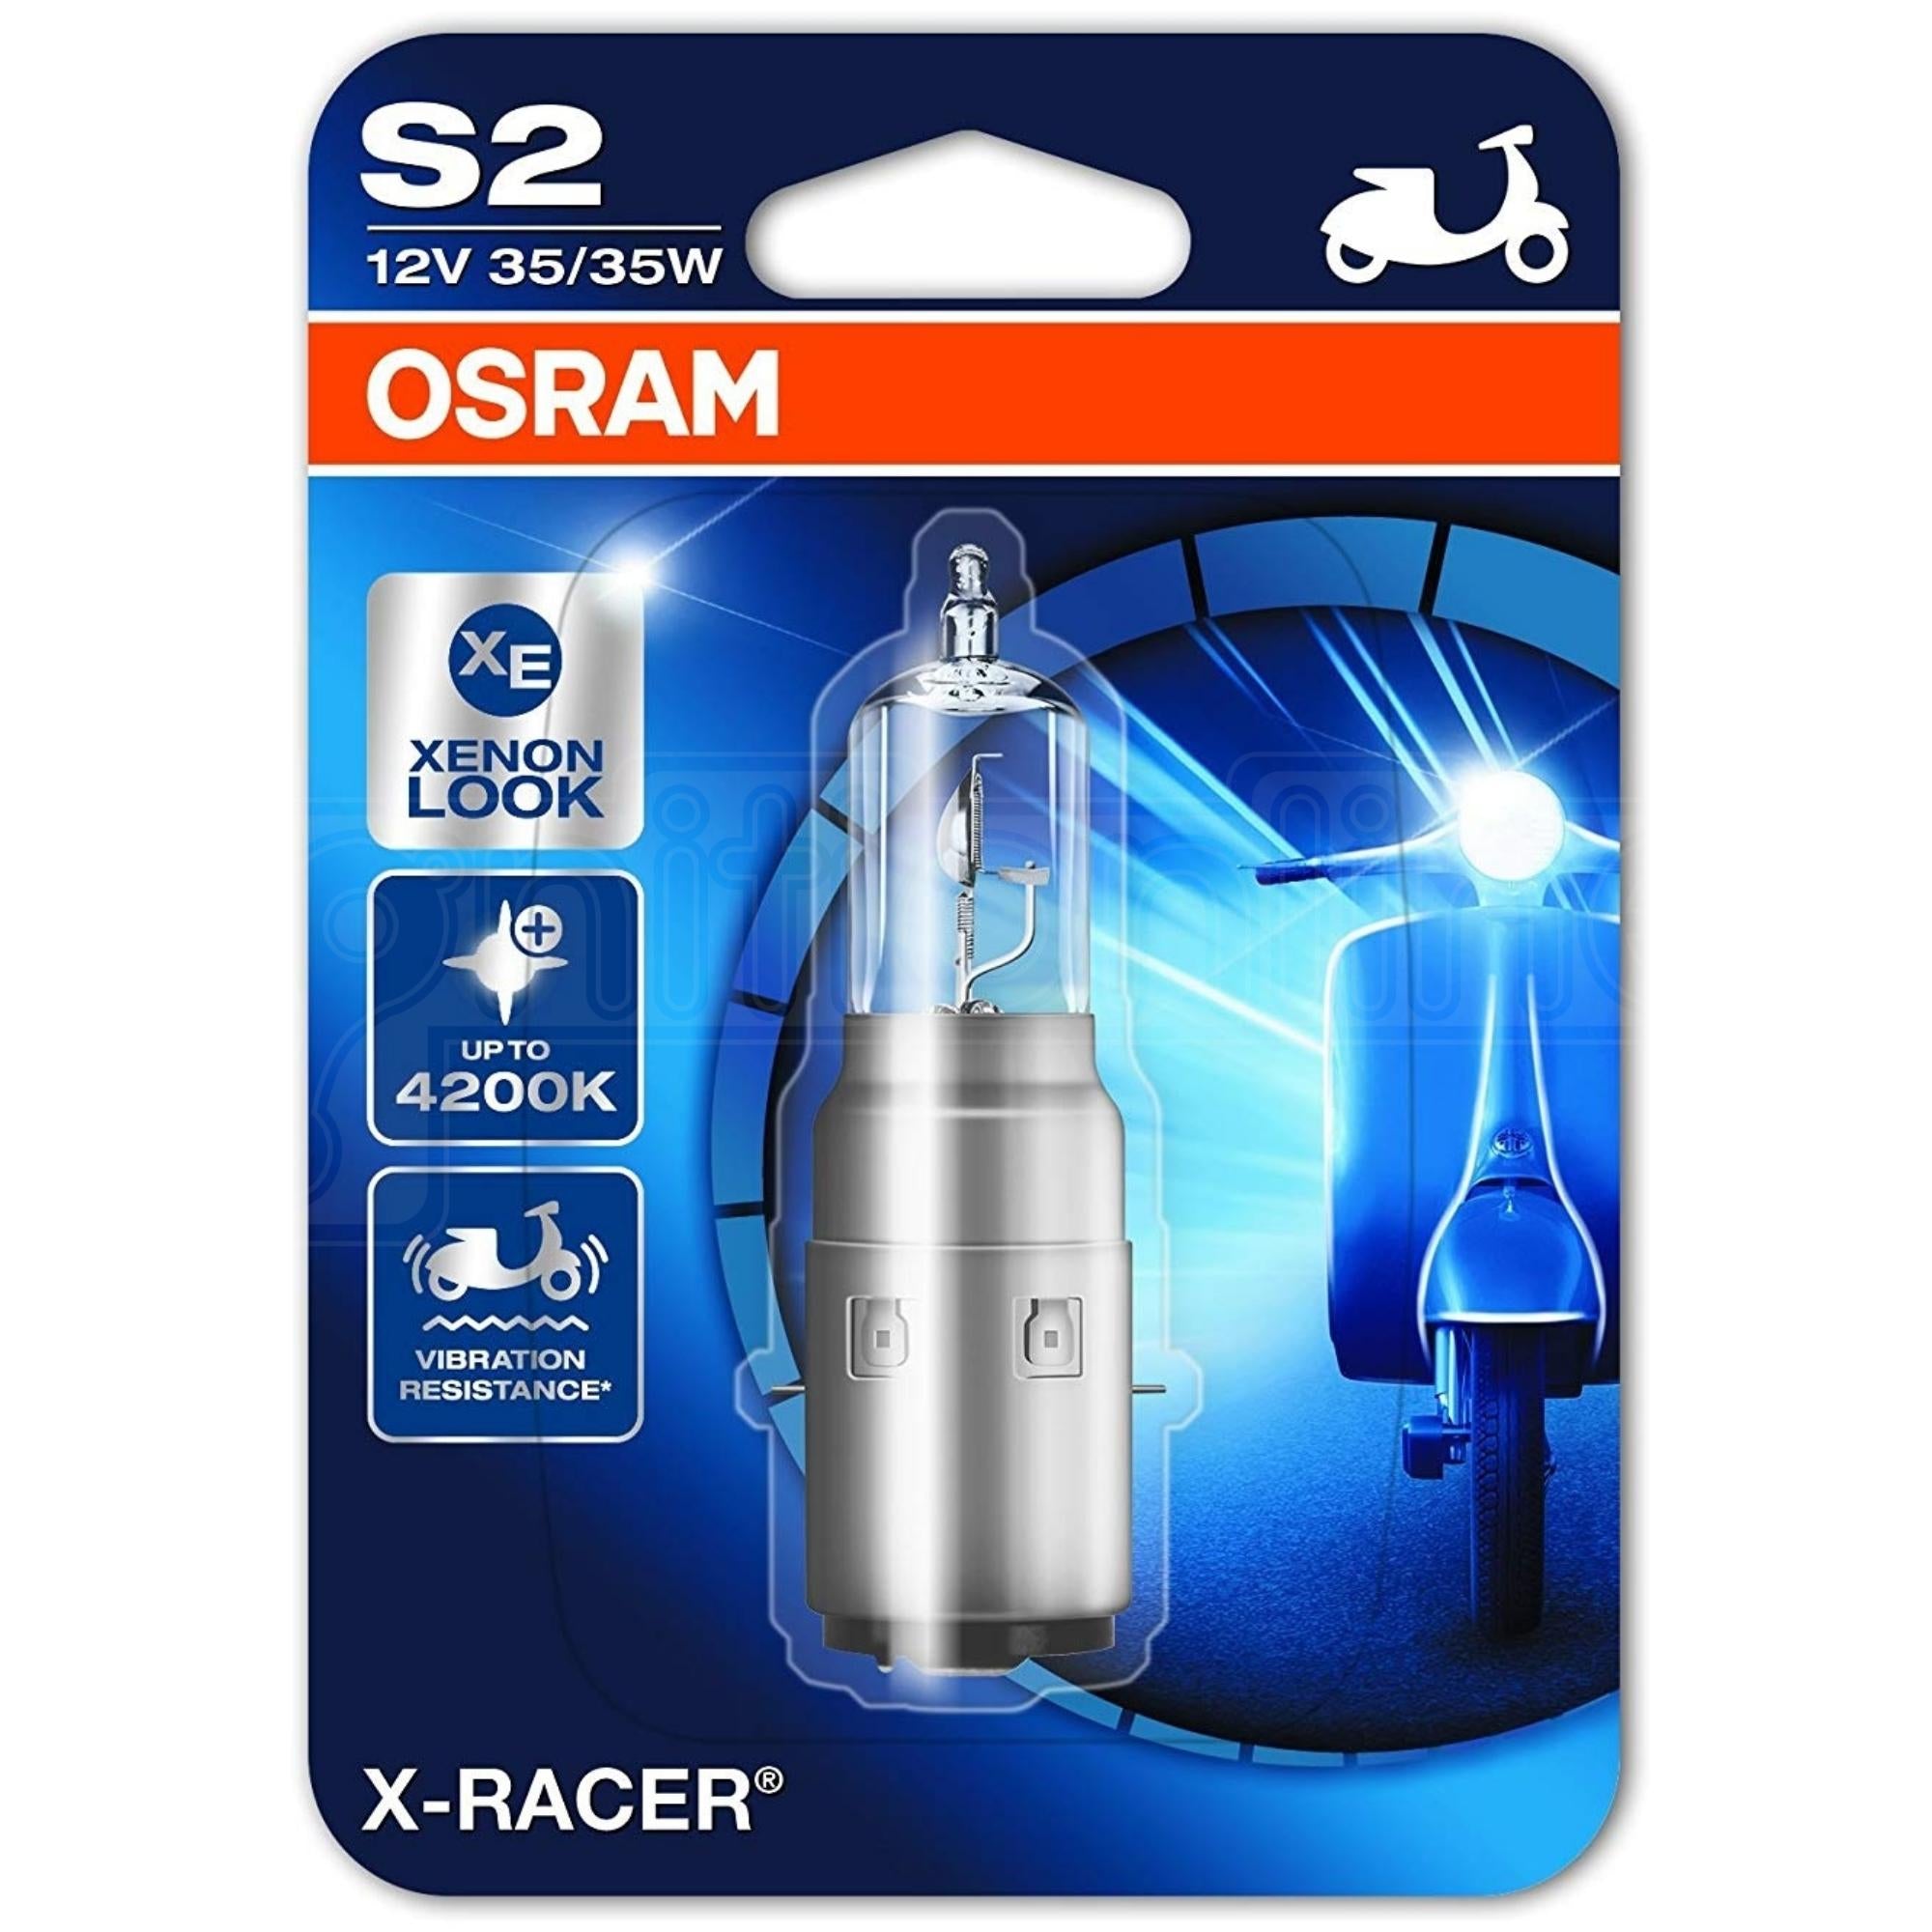 Osram S2 12V 30/35W X-Racer Headlight Motorbike Bulbs